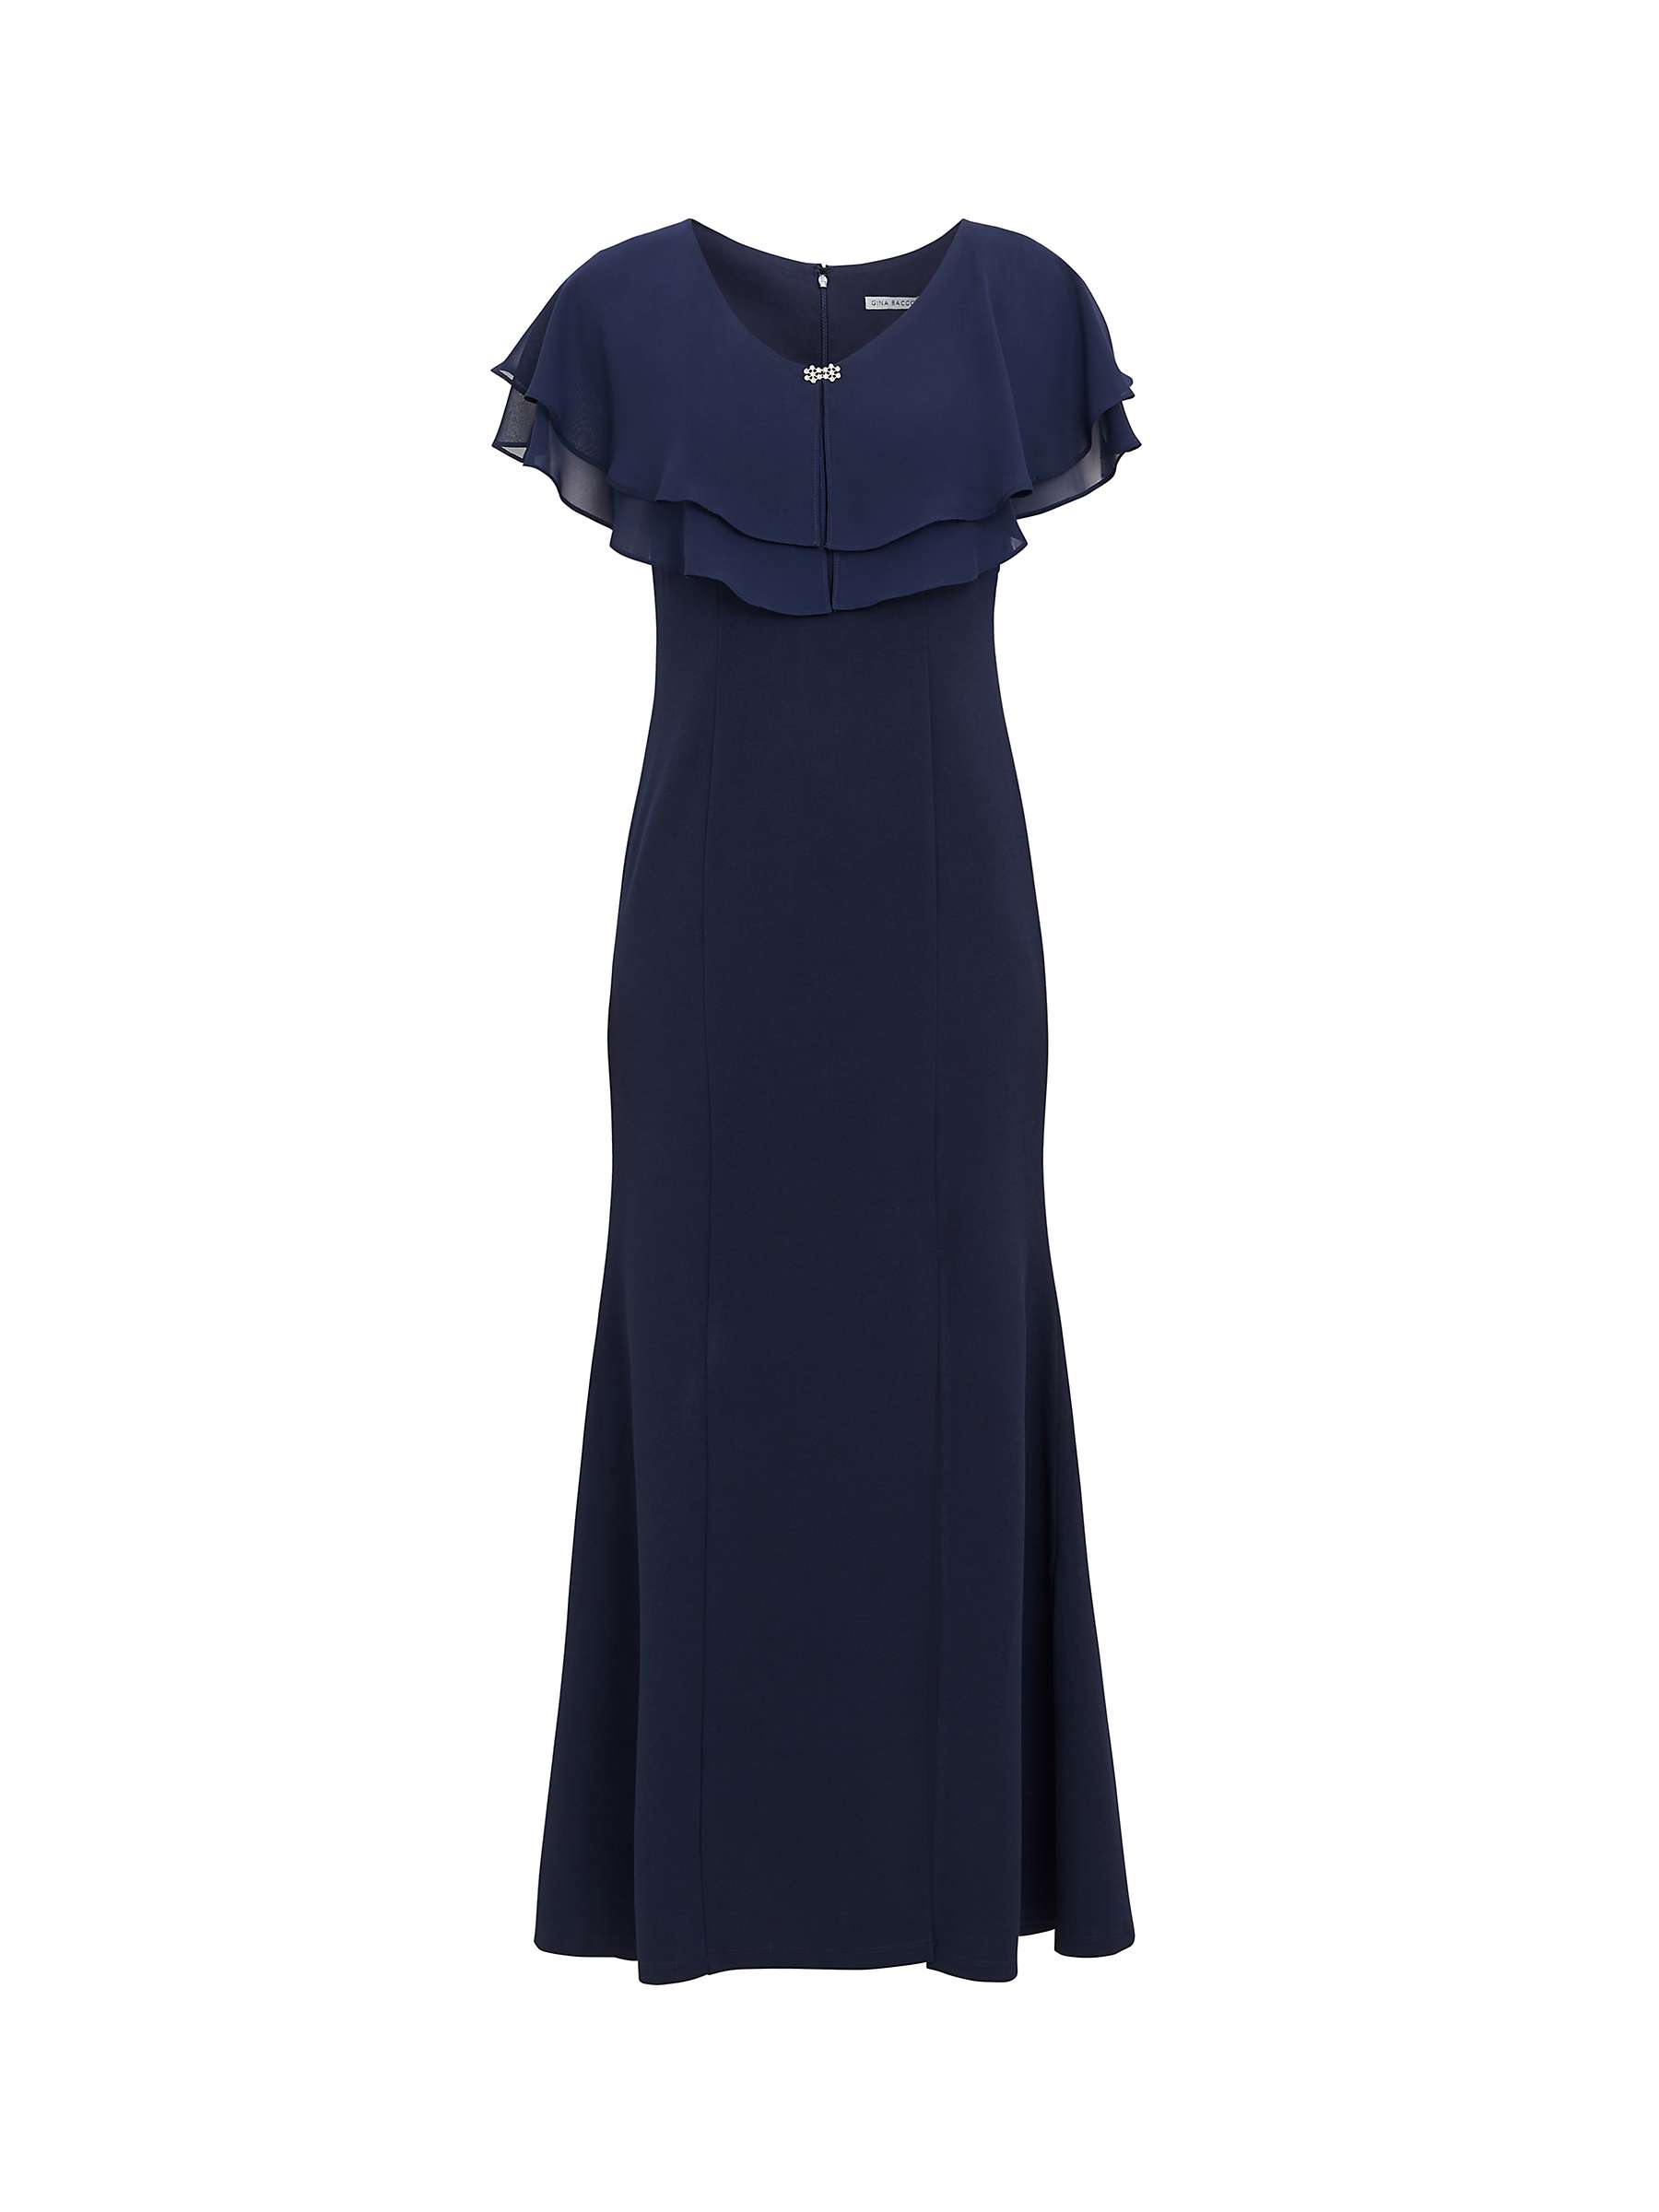 Buy Gina Bacconi Sharla Cape Maxi Dress, Navy Online at johnlewis.com